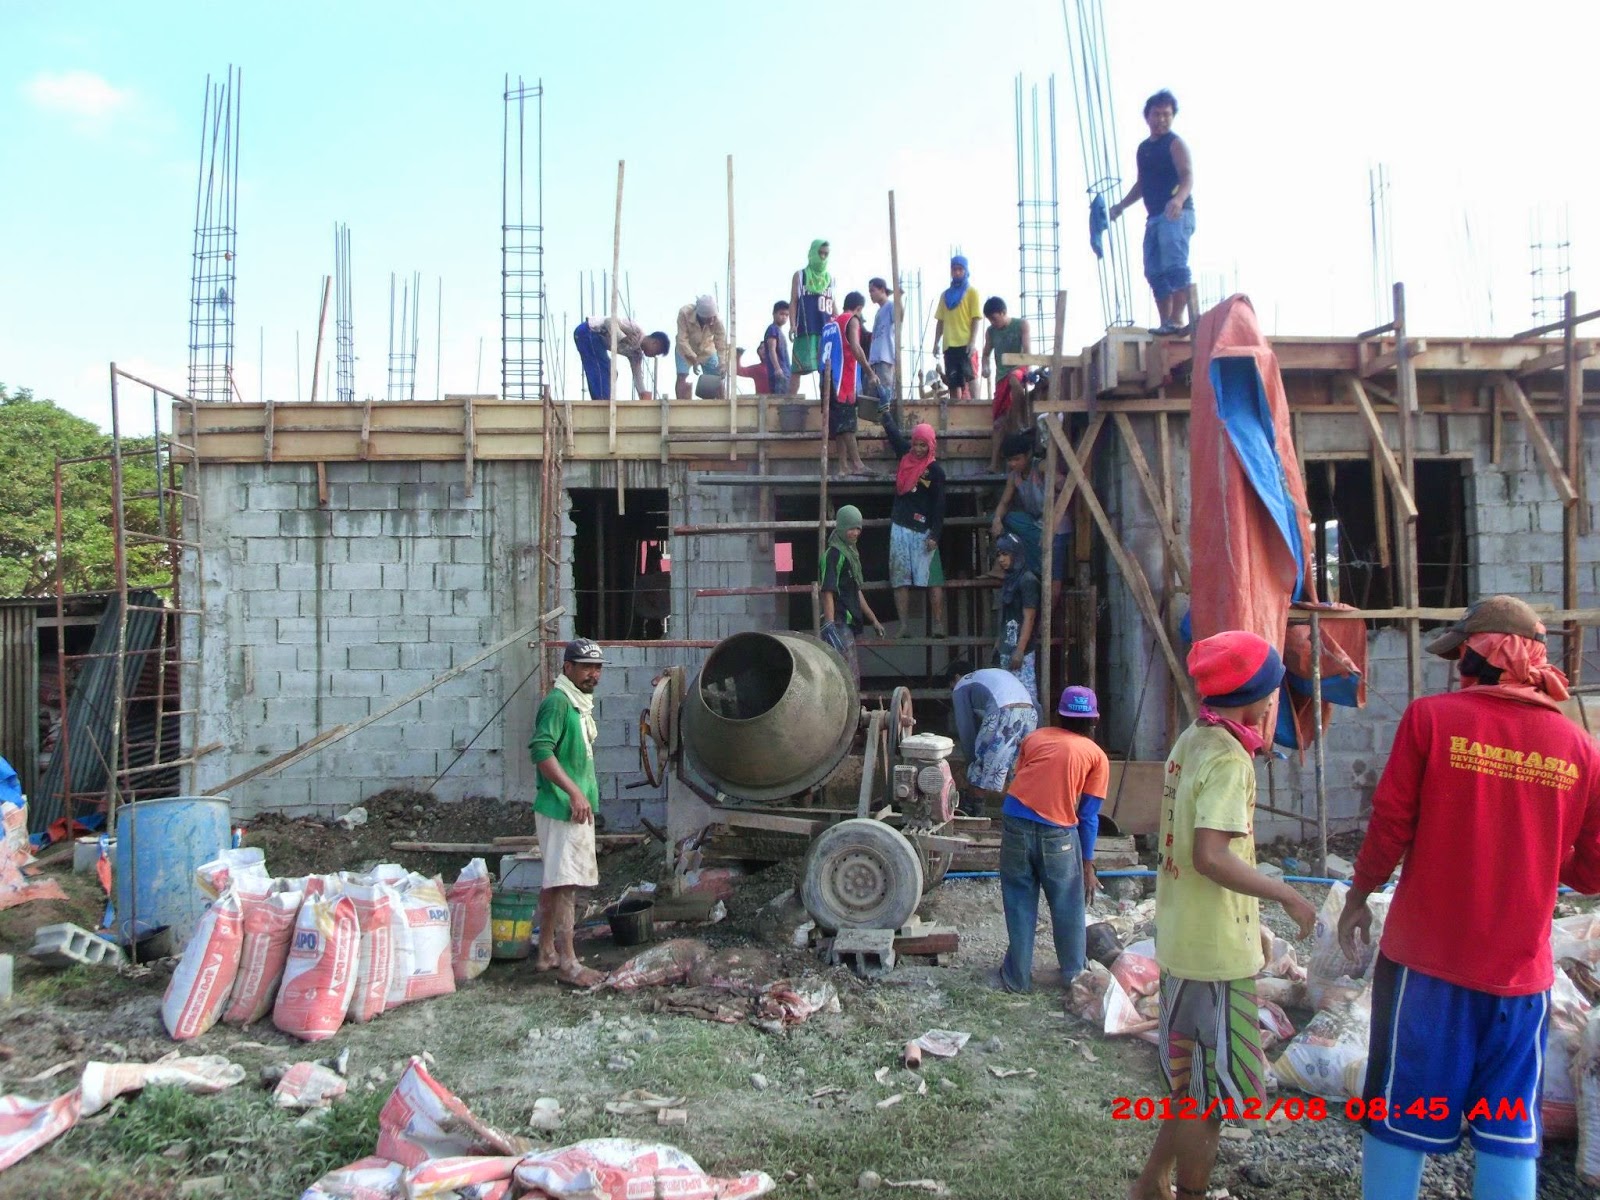 Savannah Trails house construction project in Oton, Iloilo ...